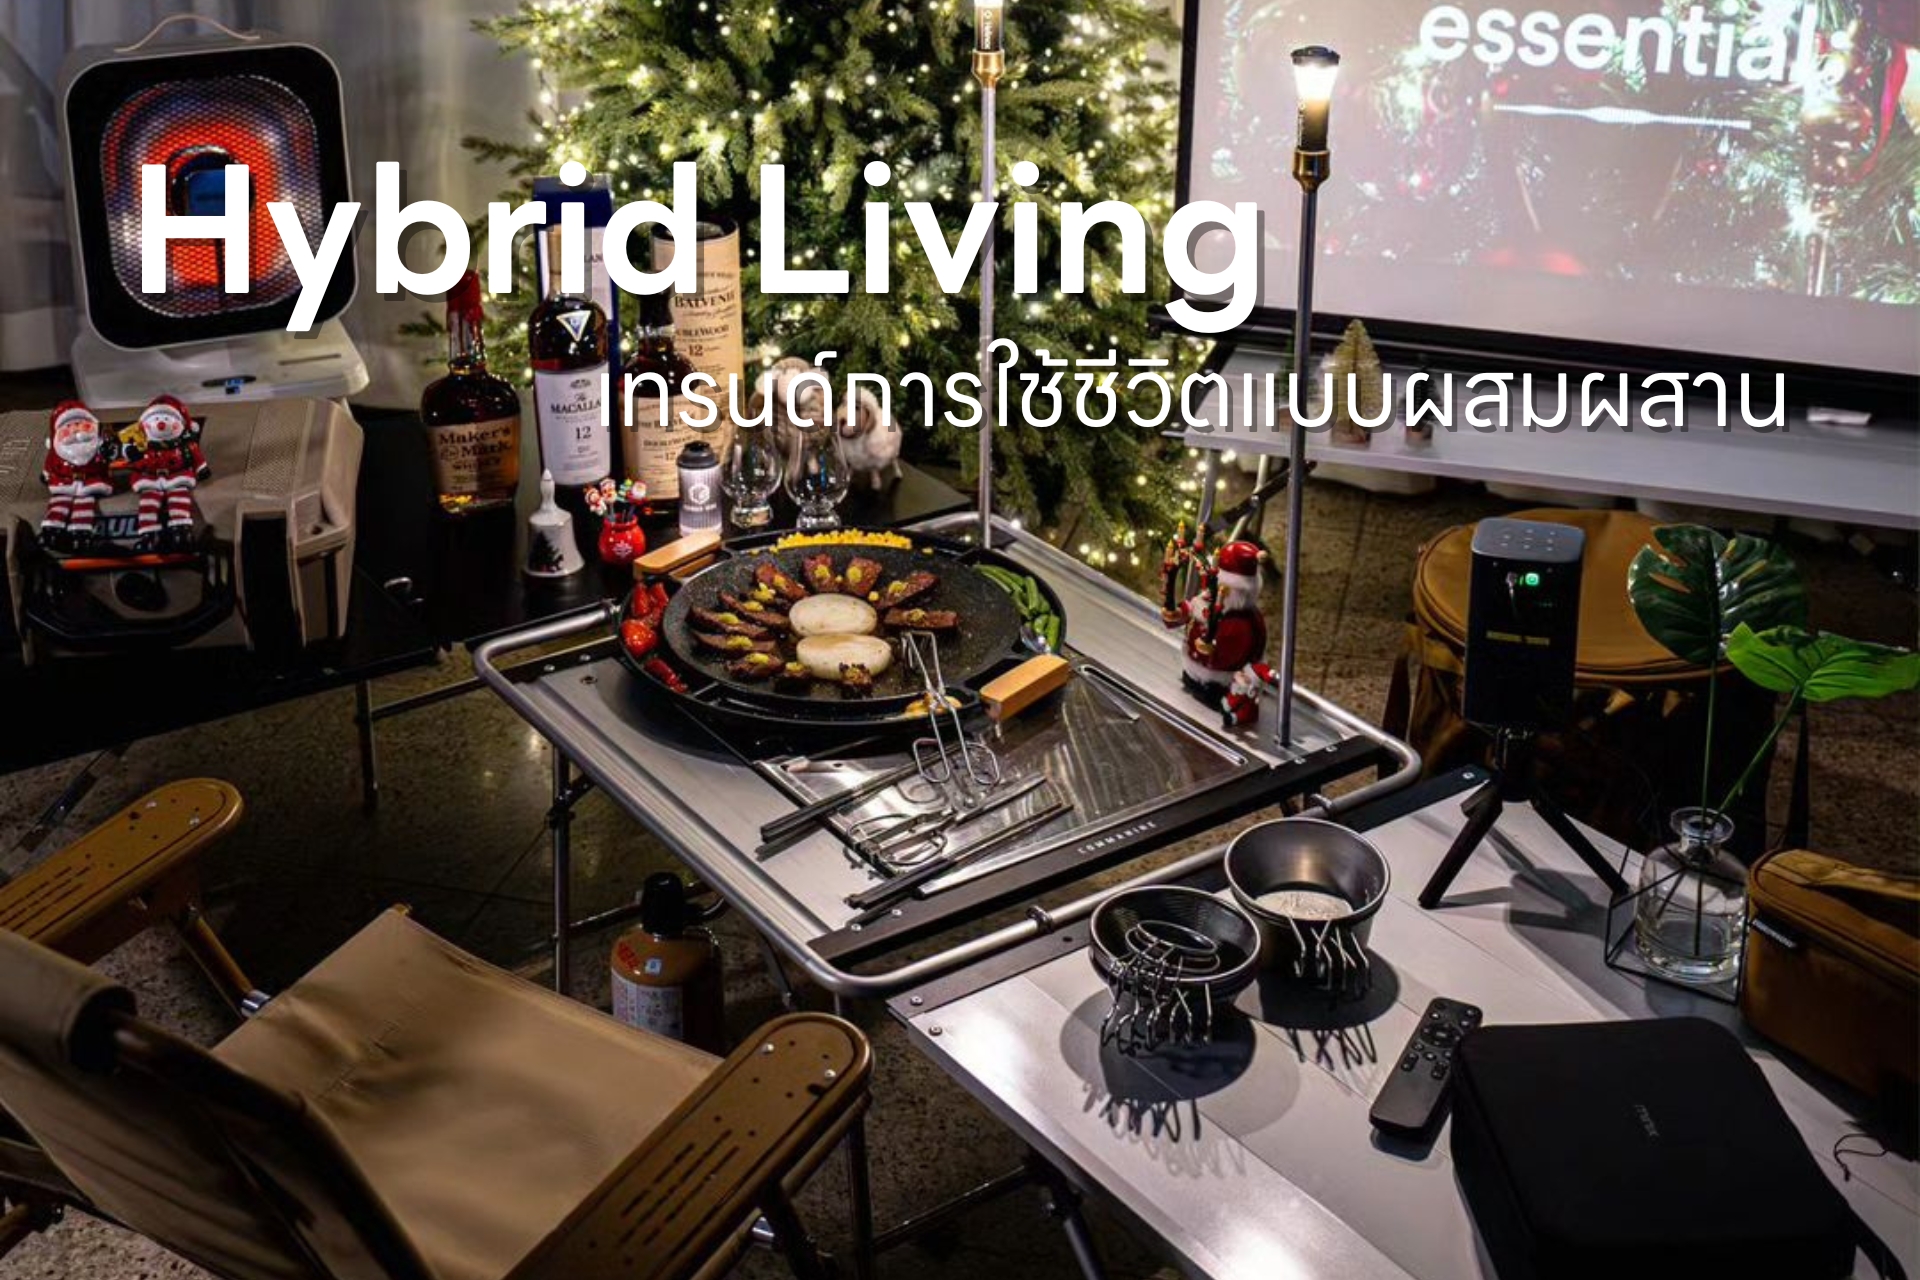 Hybrid Living (Home + Outdoor): เทรนด์การใช้ชีวิตแบบผสมผสาน